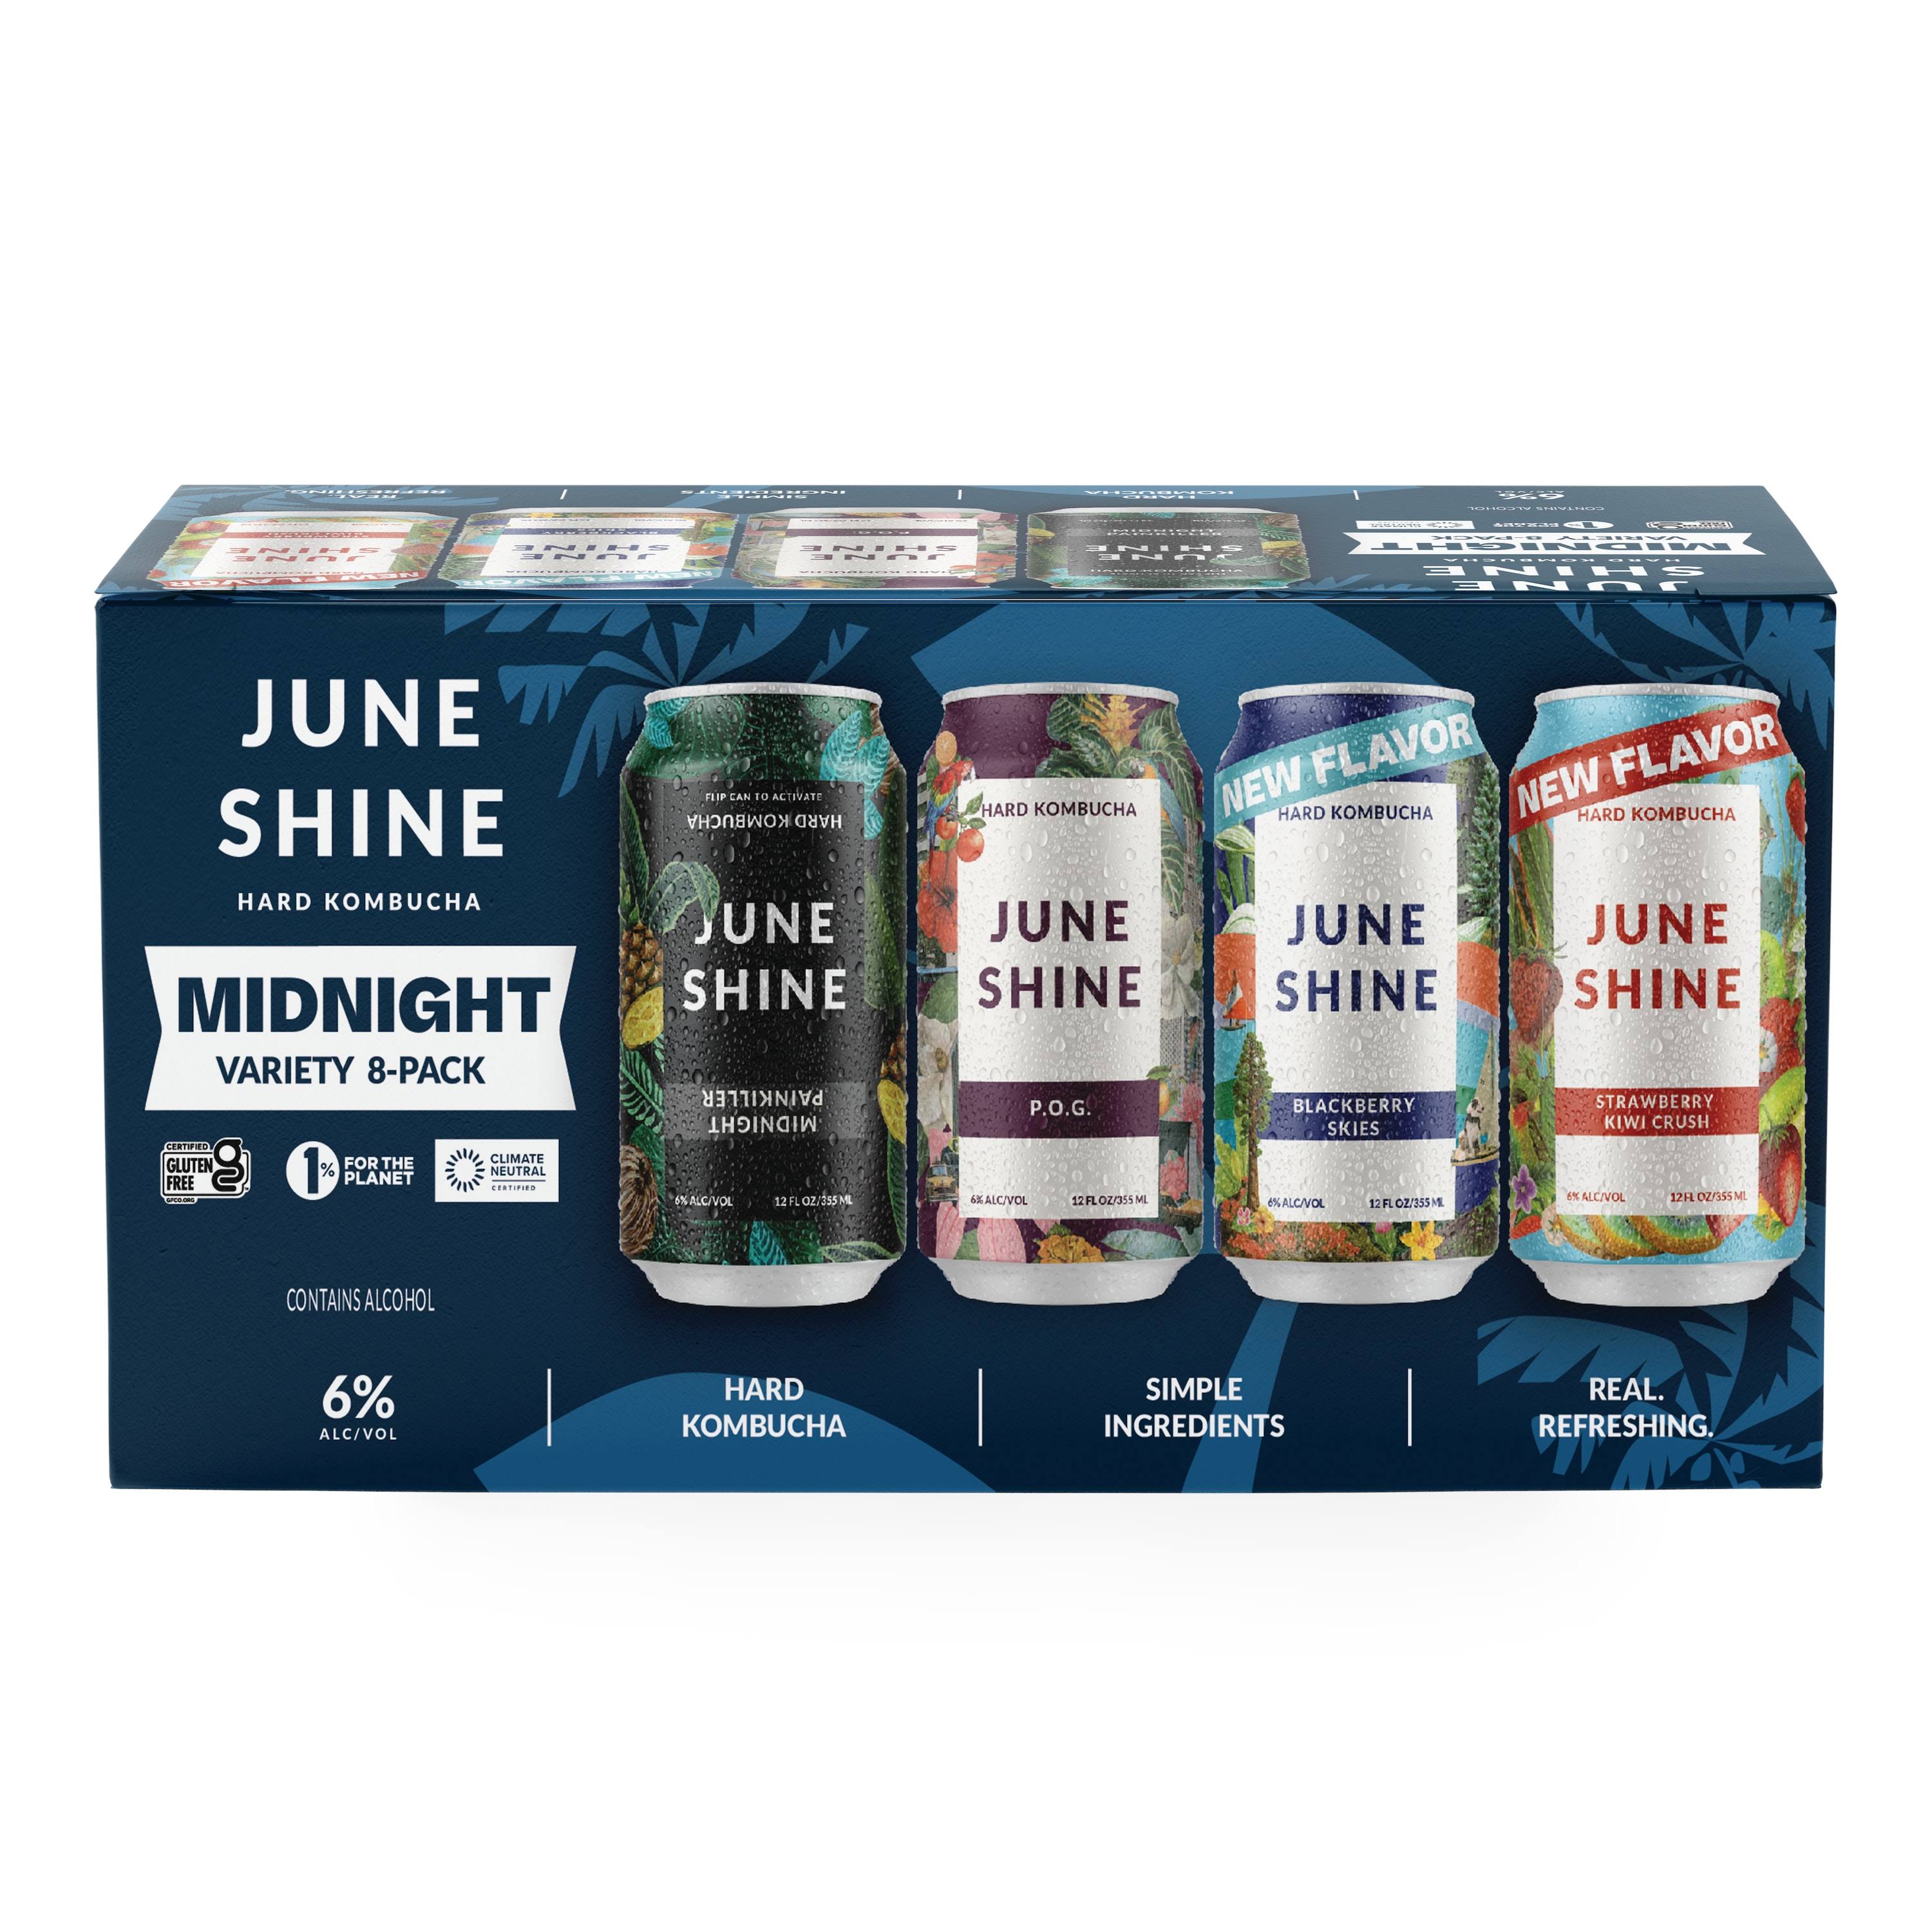 June Shine Hard Kombucha, Tropical Variety, 8 Pack - 8 pack, 12 fl oz cans